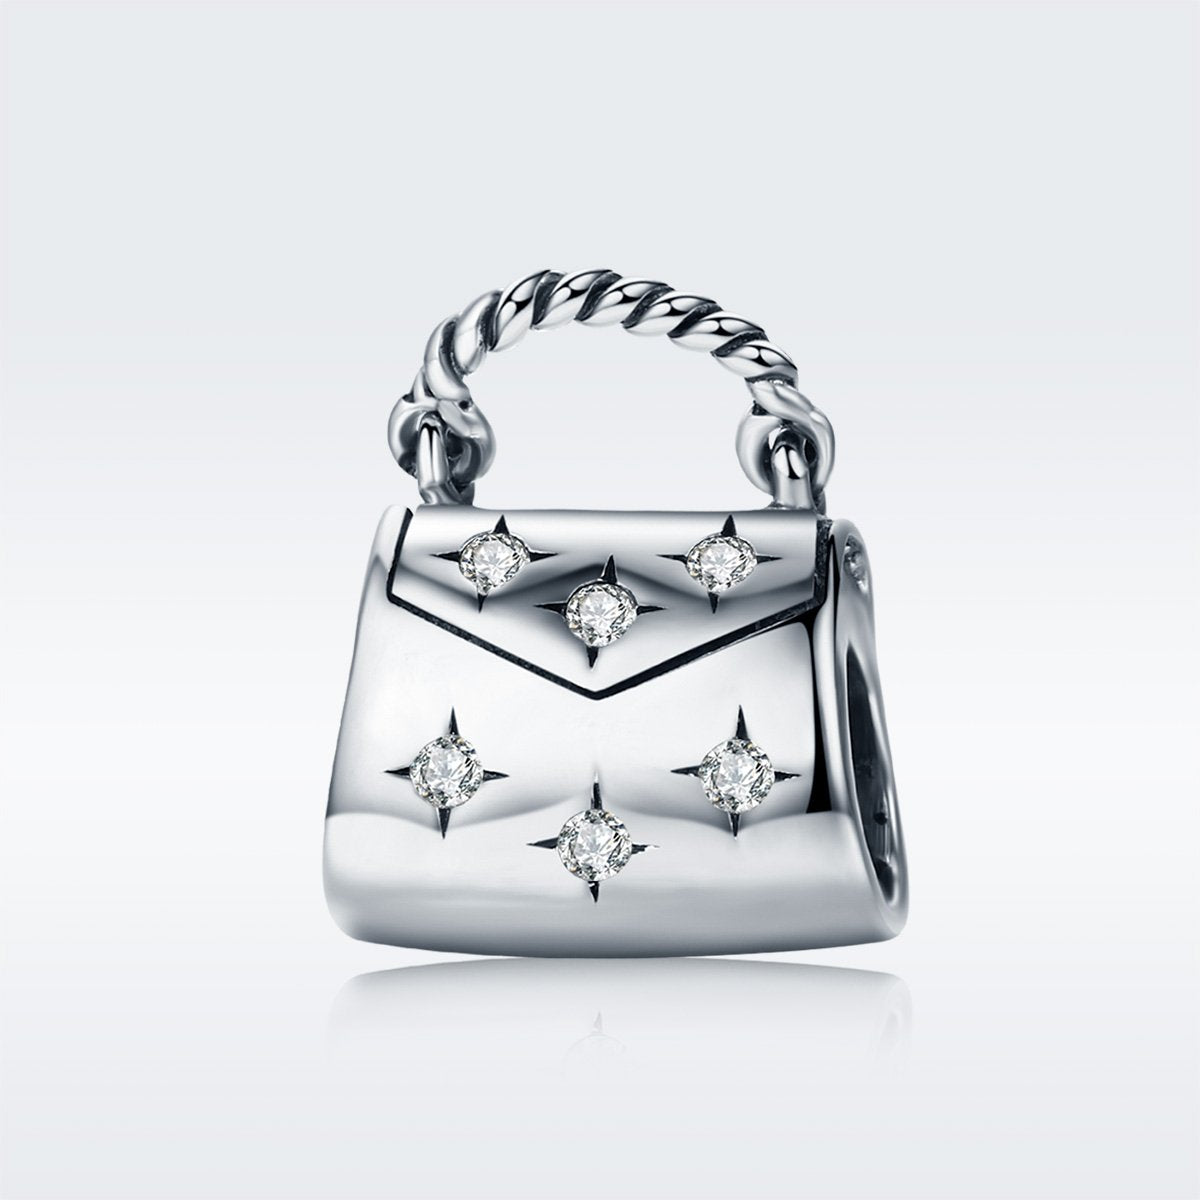 Sterling 925 silver charm the hand bag bead pendant fits Pandora charm and European charm bracelet Xaxe.com